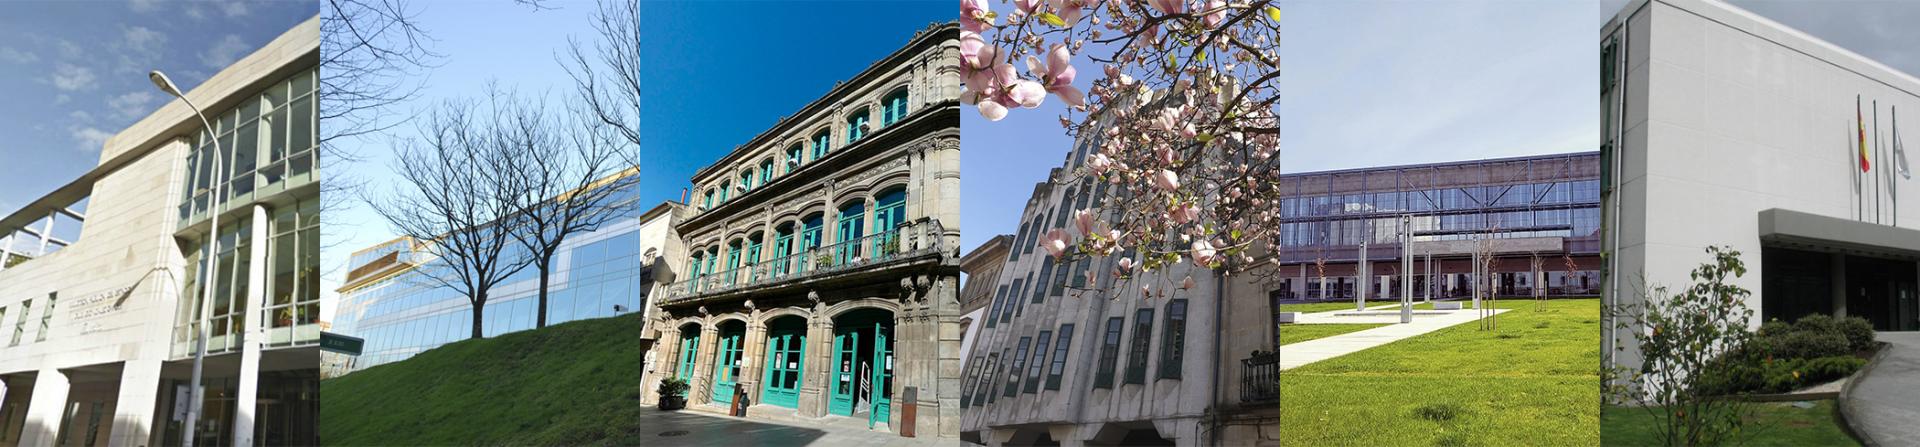 Edificios da Rede de Bibliotecas de Galicia